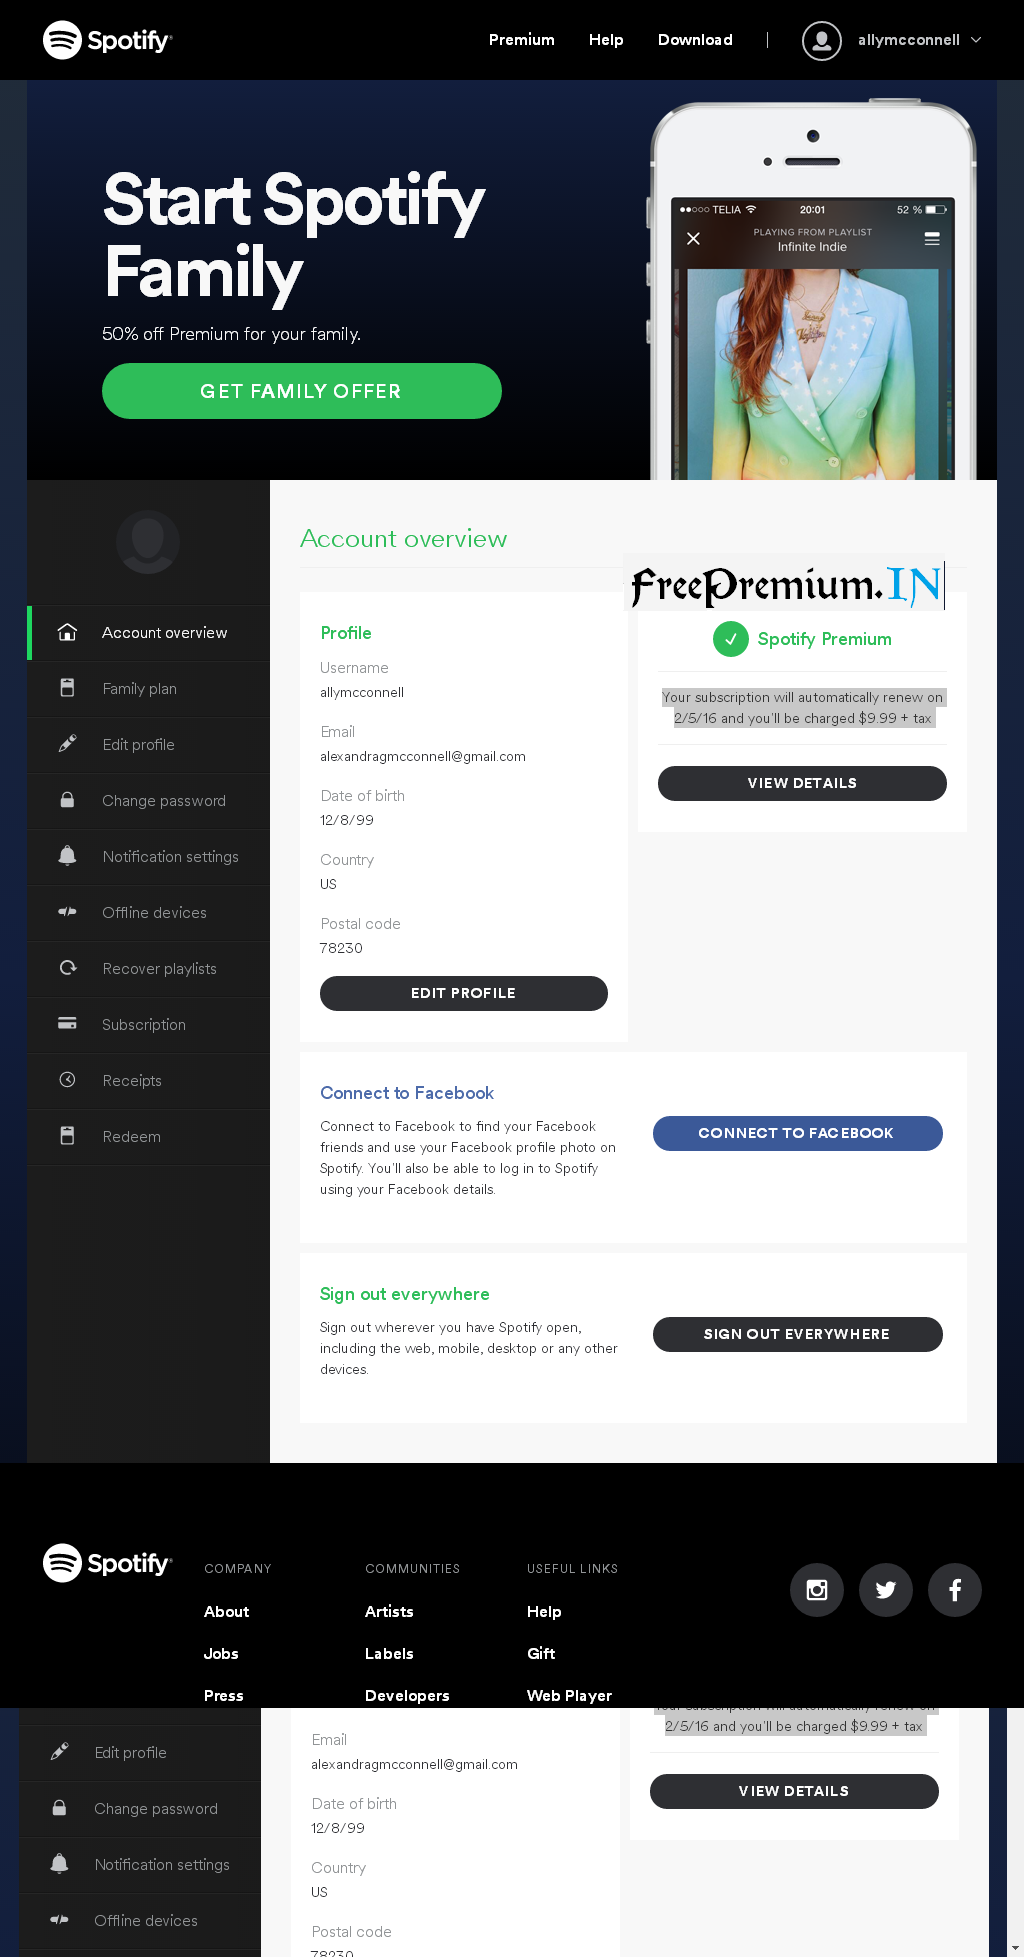 spotify premium cost per month